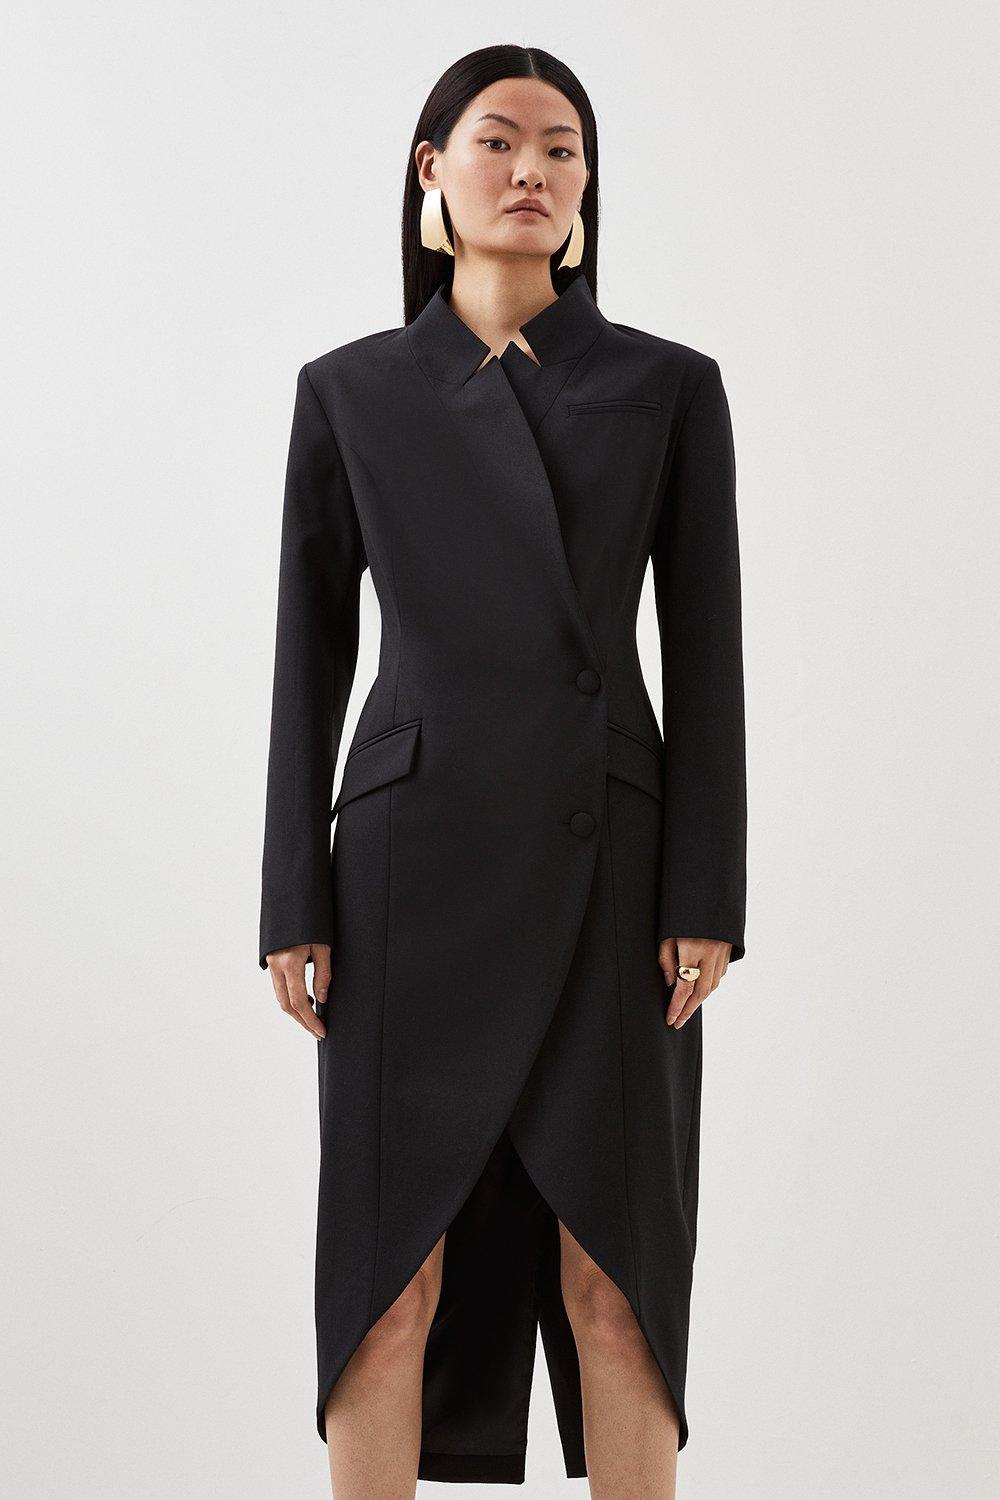 wool blend tailored pocket detail tuxedo coat